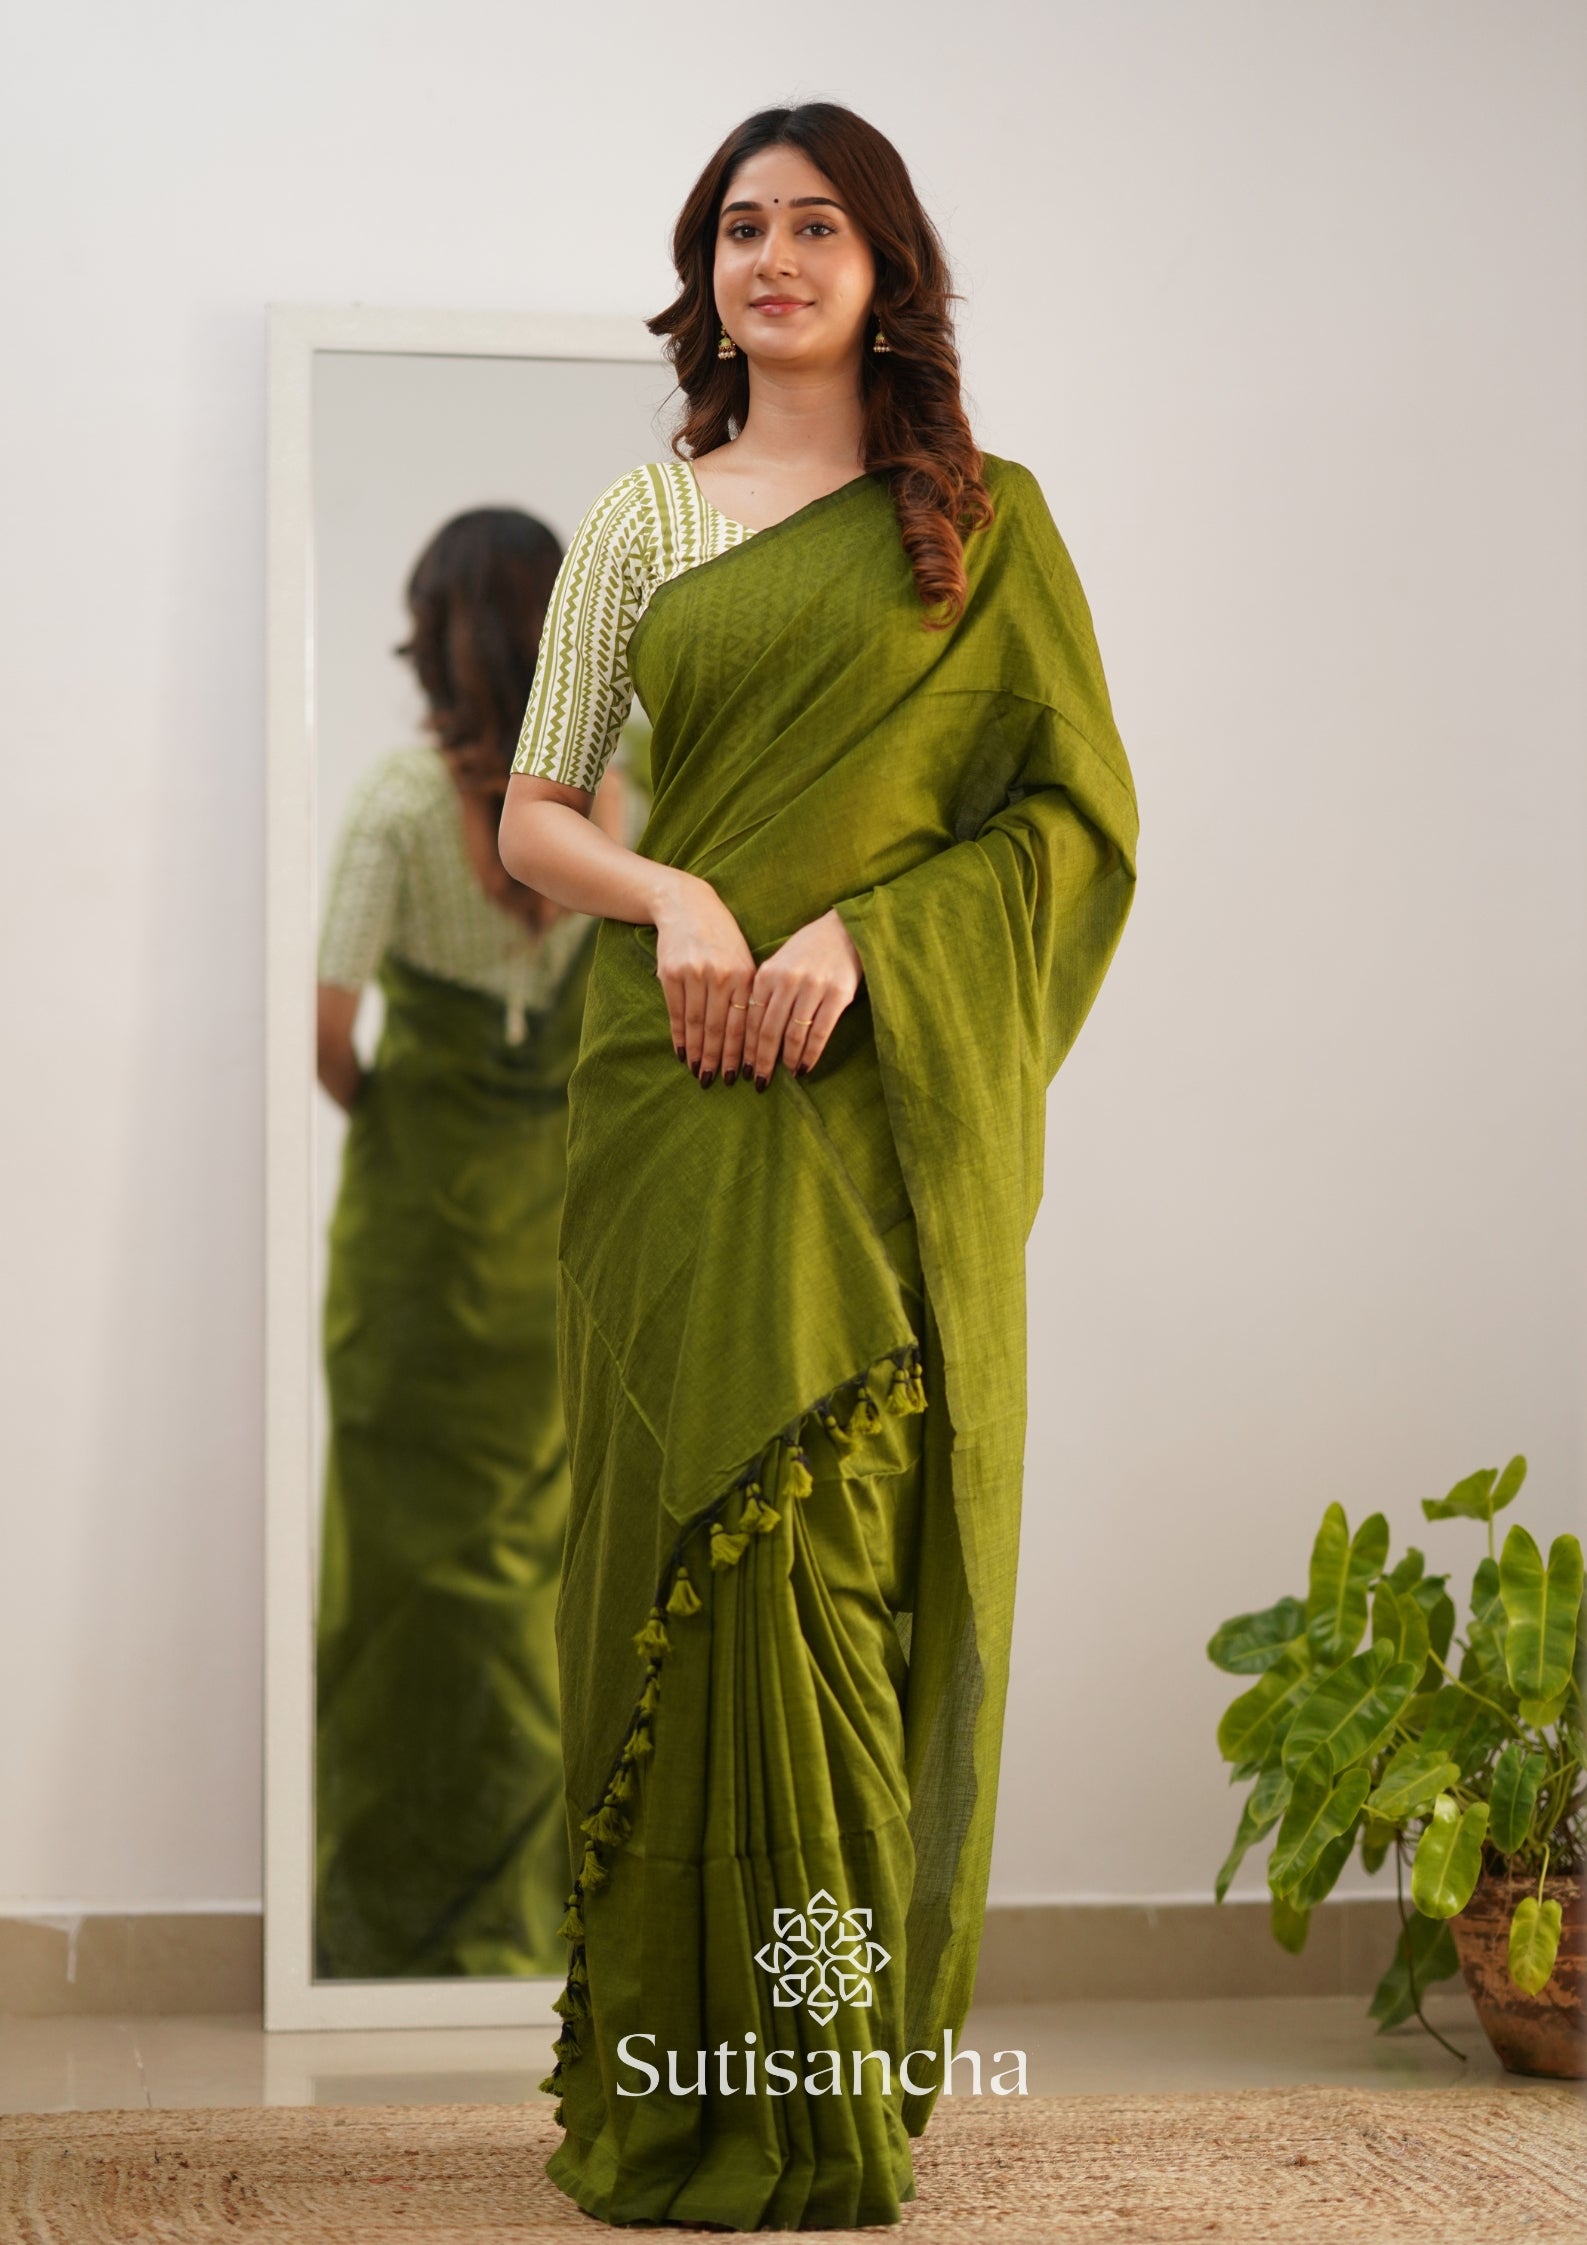 Sutisancha Mahendi Khadi With Design Blouse